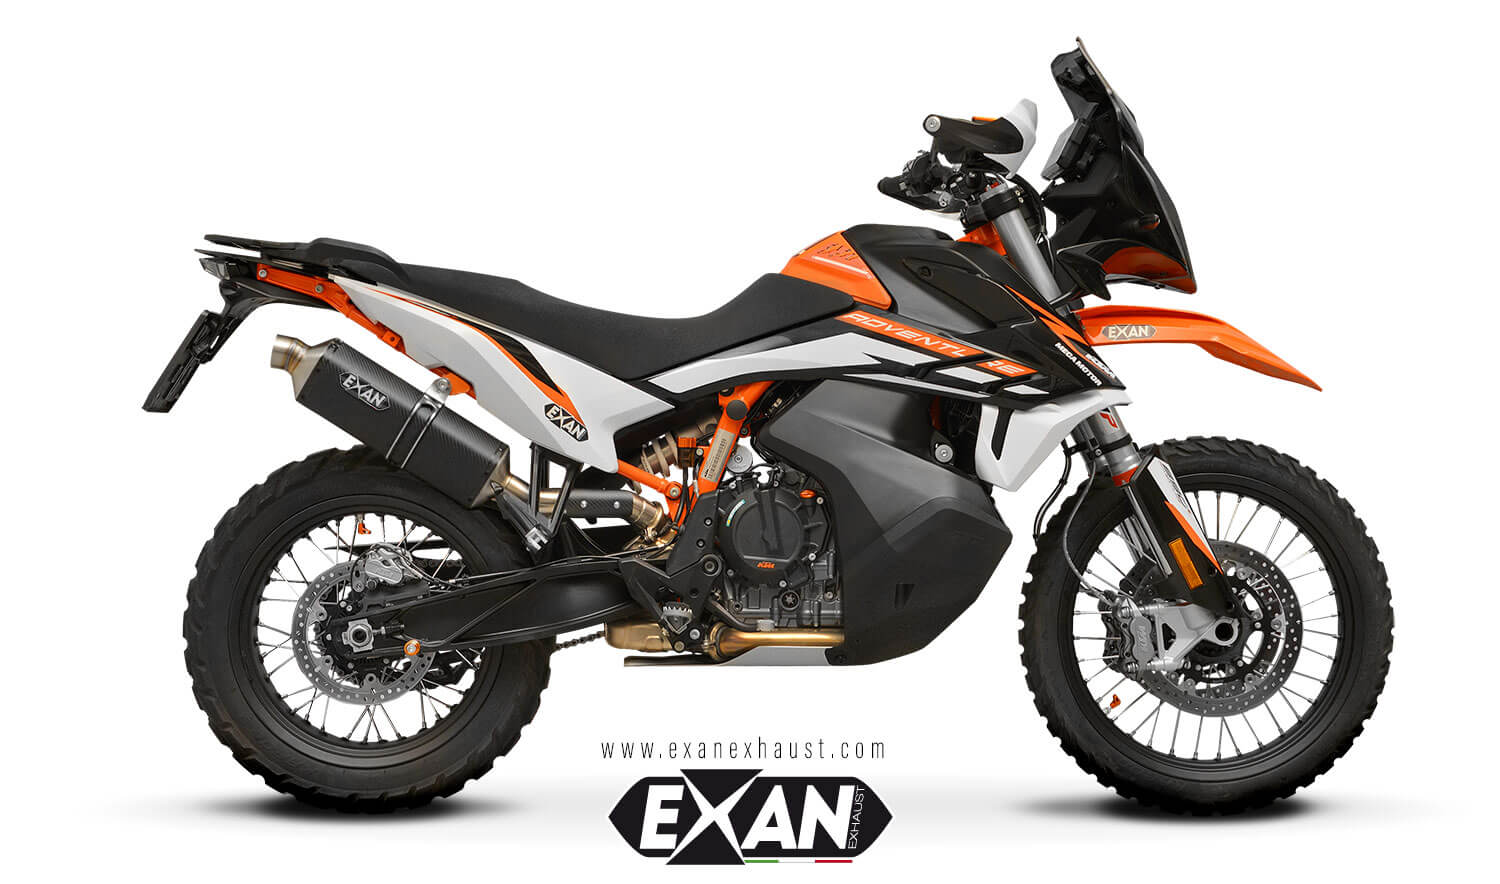 Exan-Exhaust-KTM 790 Adventure (2019 - 2020) - euro 4 -X-Rally-Carbonio